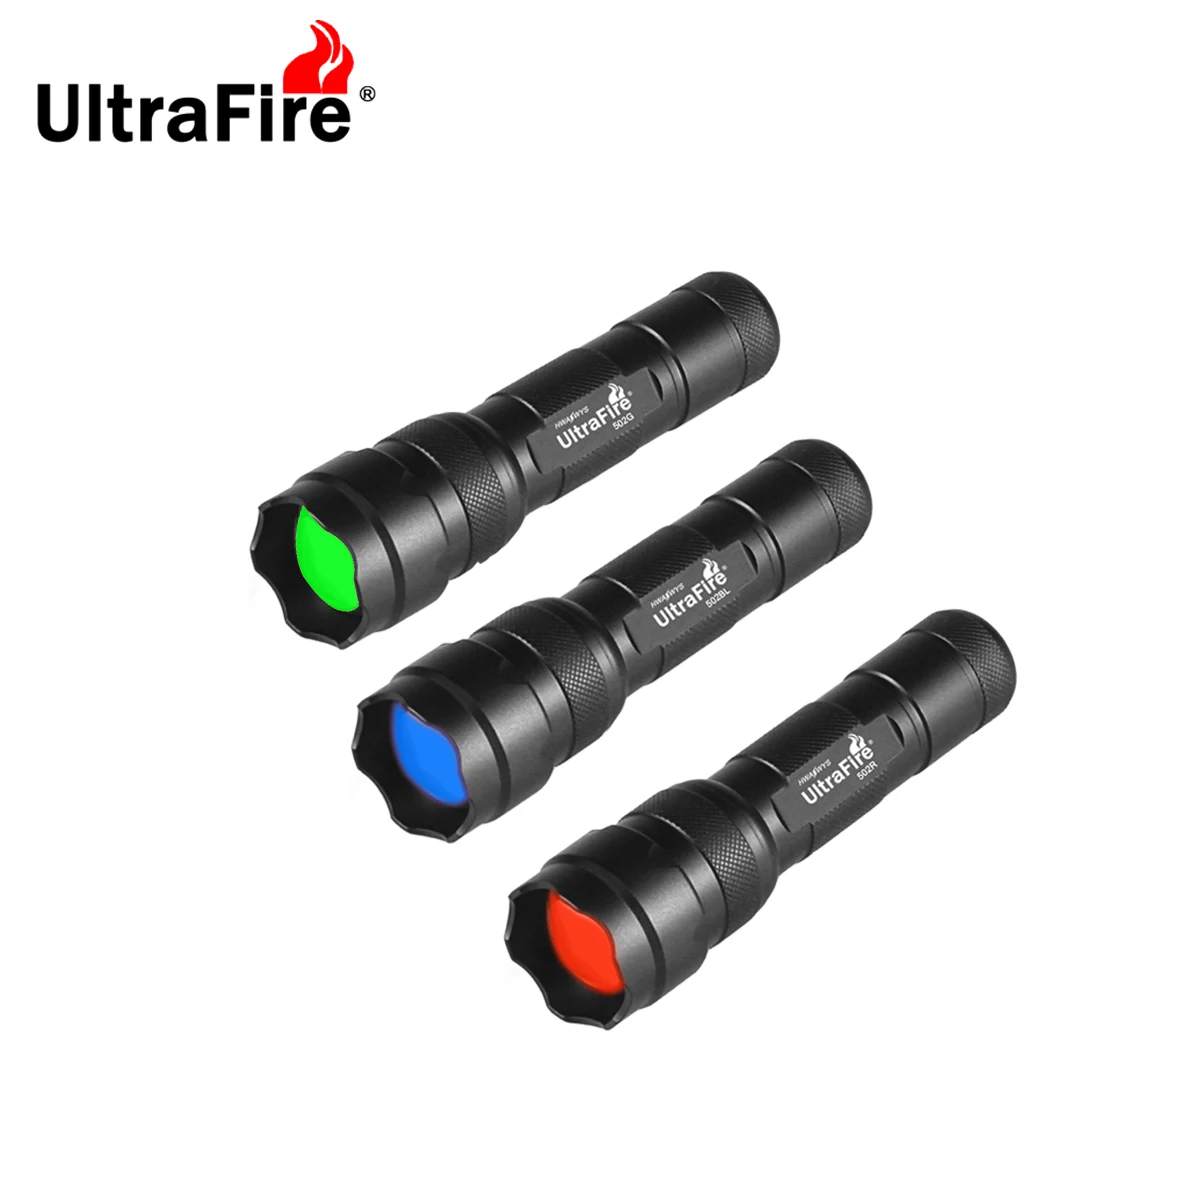 

3 Pack UltraFire 502B CREE XP-E2 Focusing Waterproof 18650 Tactical Hunting LED Flashlight (Green/Red/Blue Light )